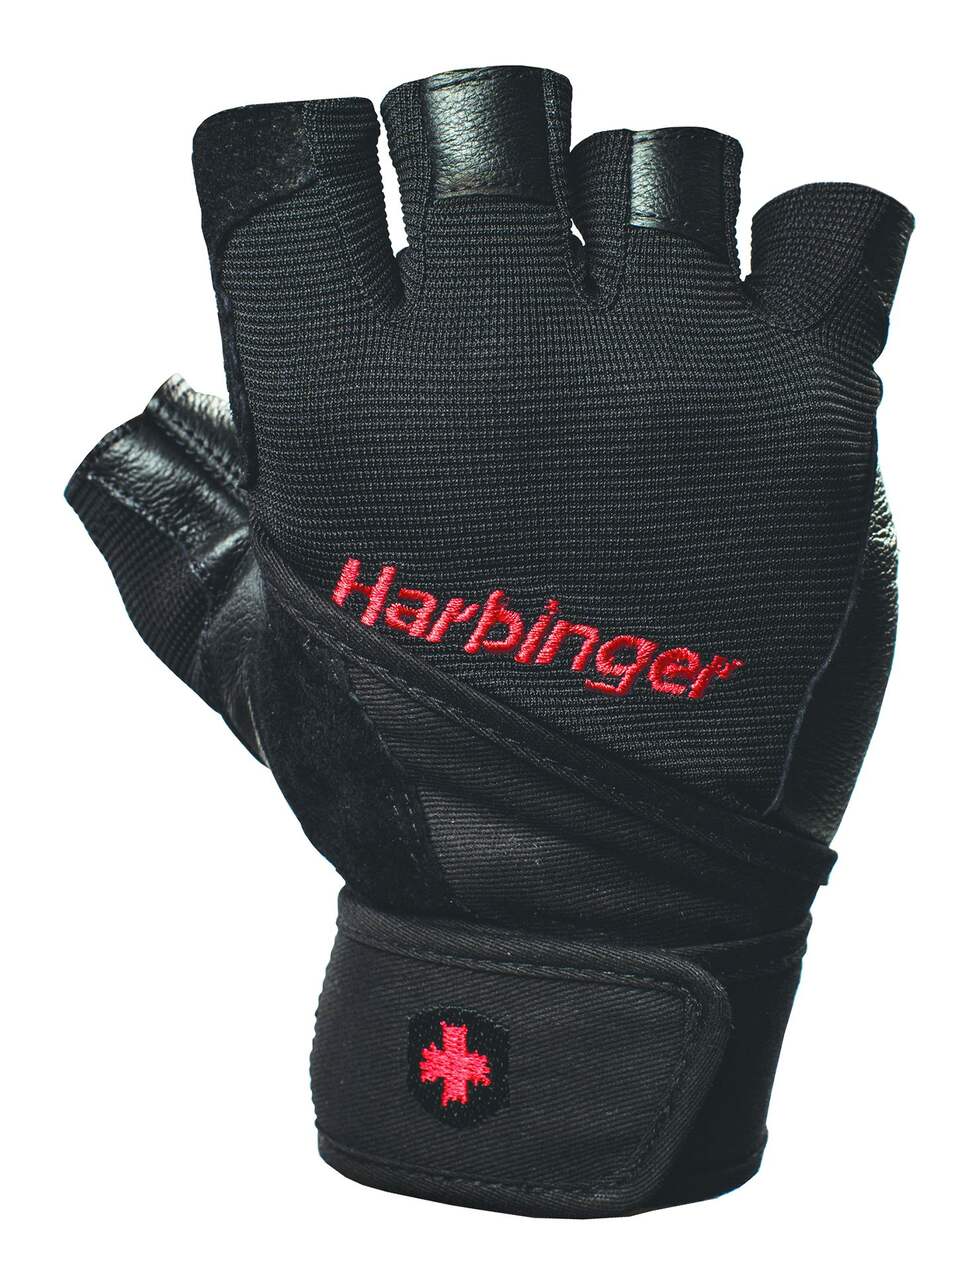 Harbinger Men's Strength Training Pro Wristwrap Glove, Large